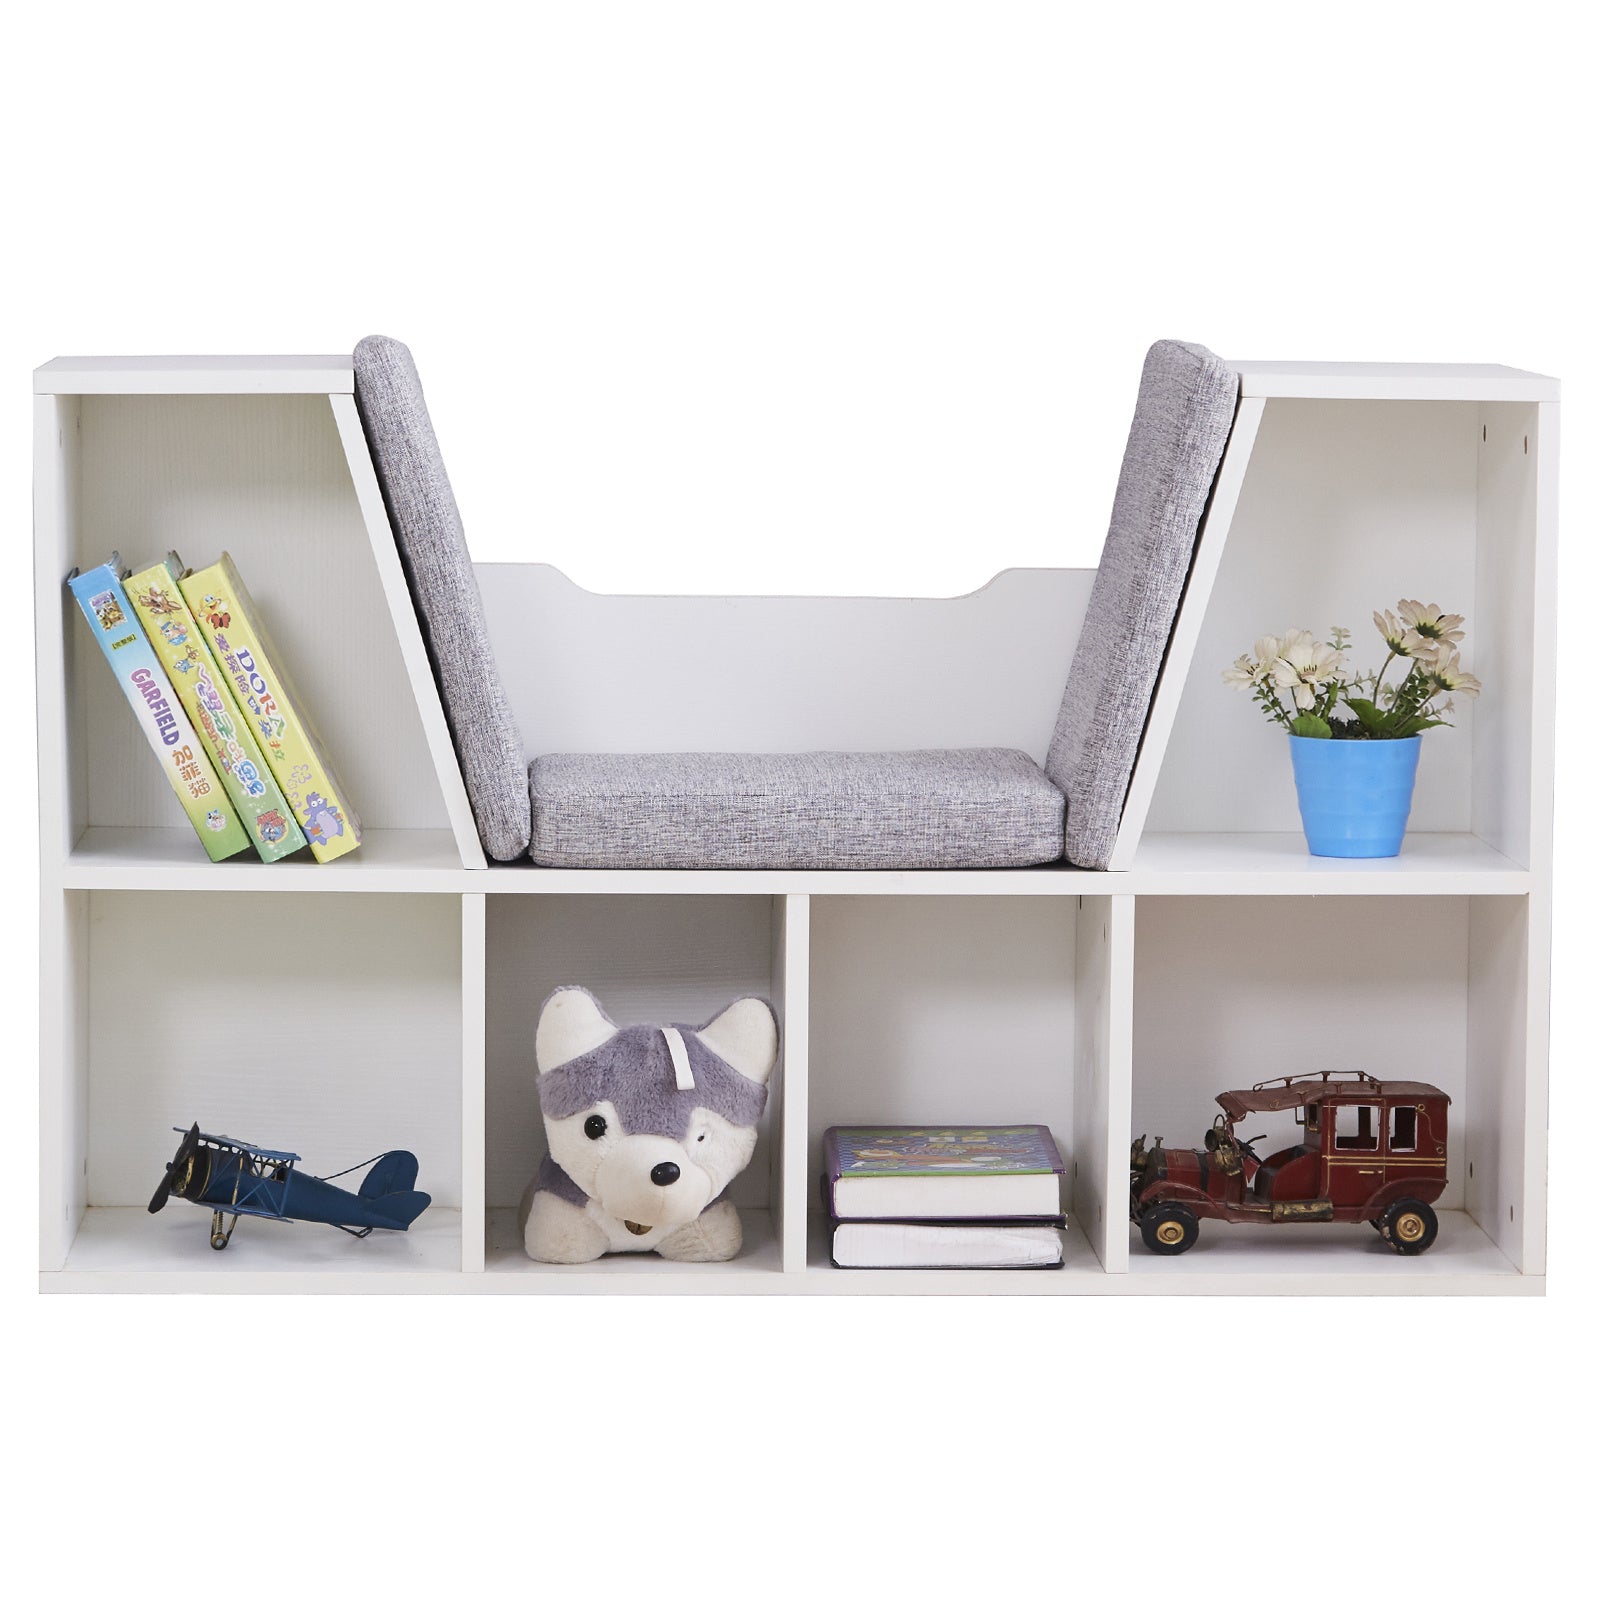 6-Cubby Kids Bookcase, Multi-Purpose Storage Organizer Cabinet Shelf for Children Dark Natural Color RT